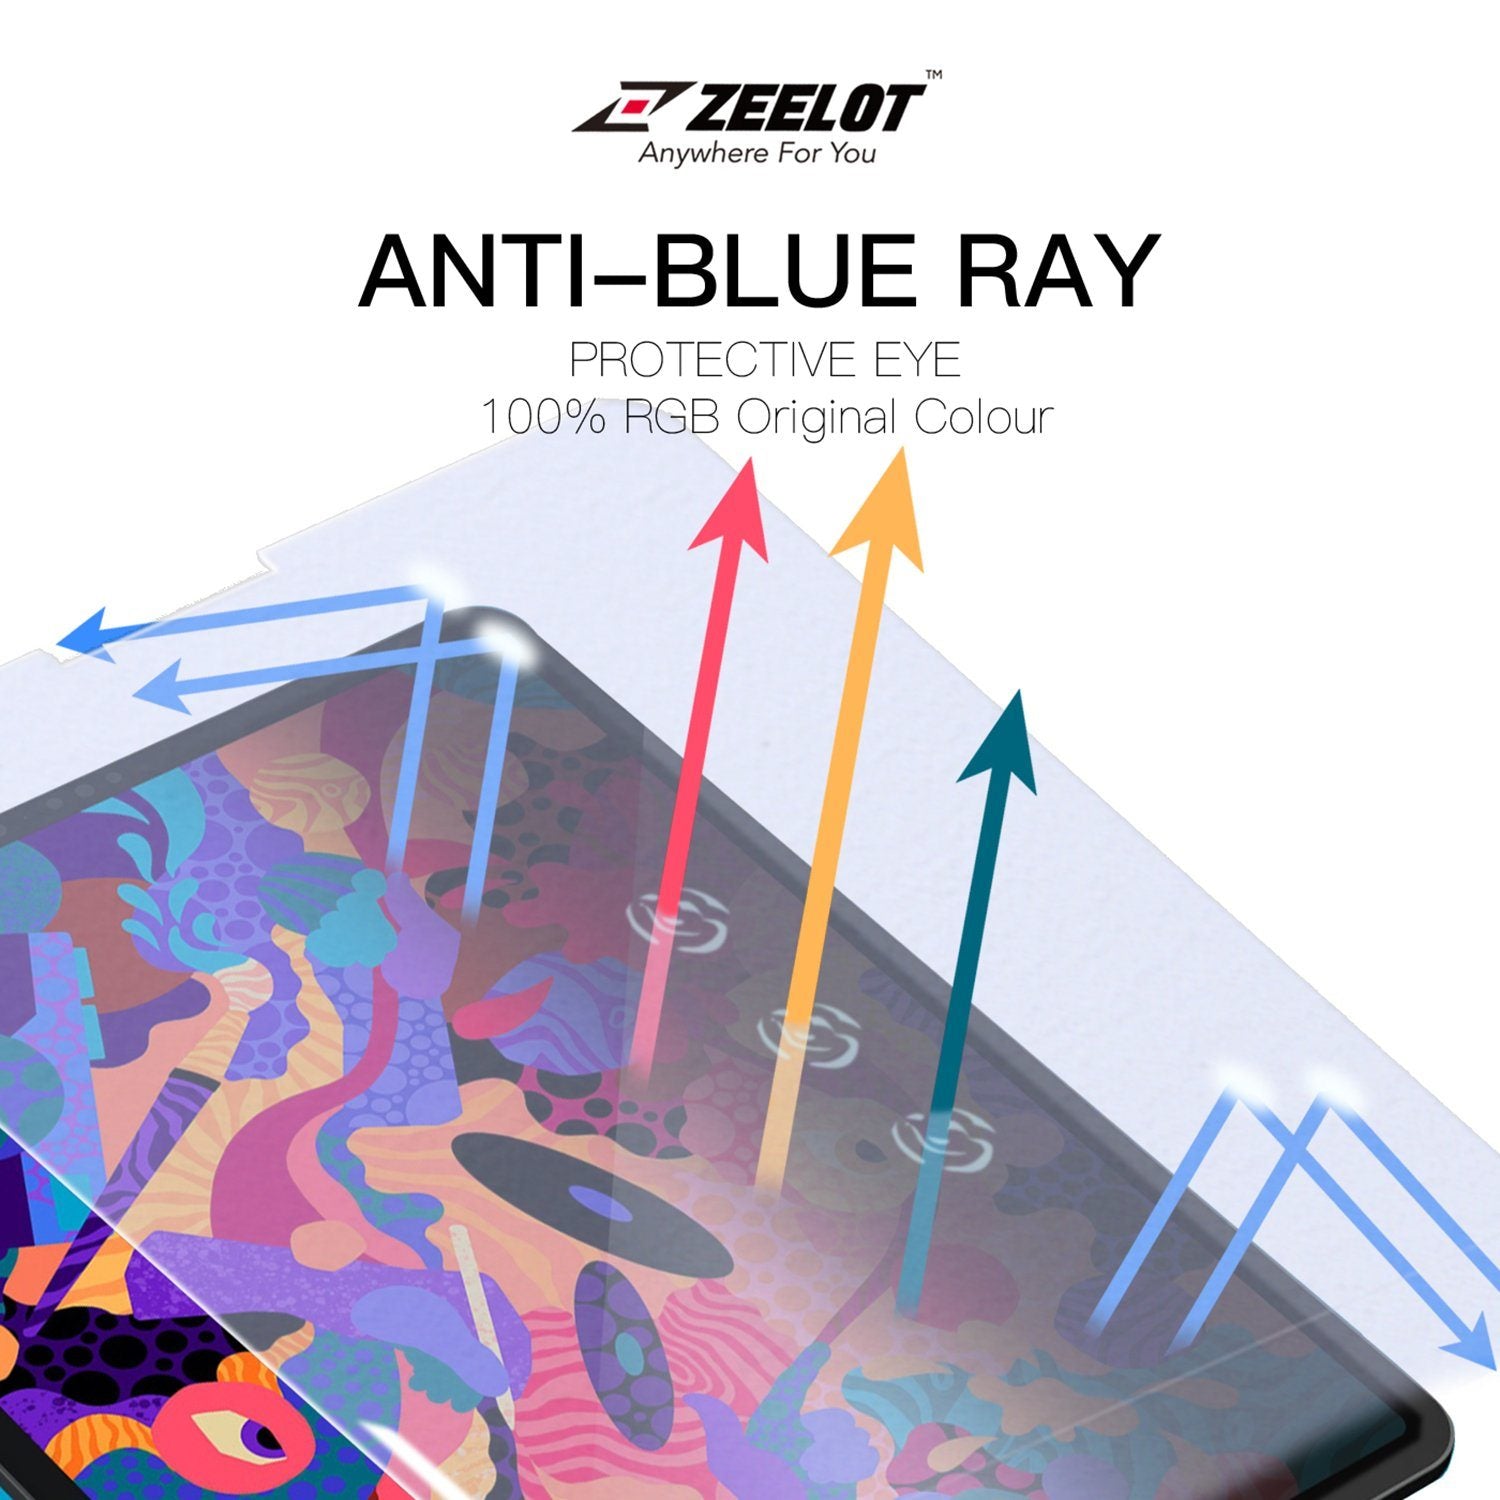 ZEELOT Anti Blue Ray Paper Like Screen Protector for iPad 10.5"(2019/2017) Default Zeelot 